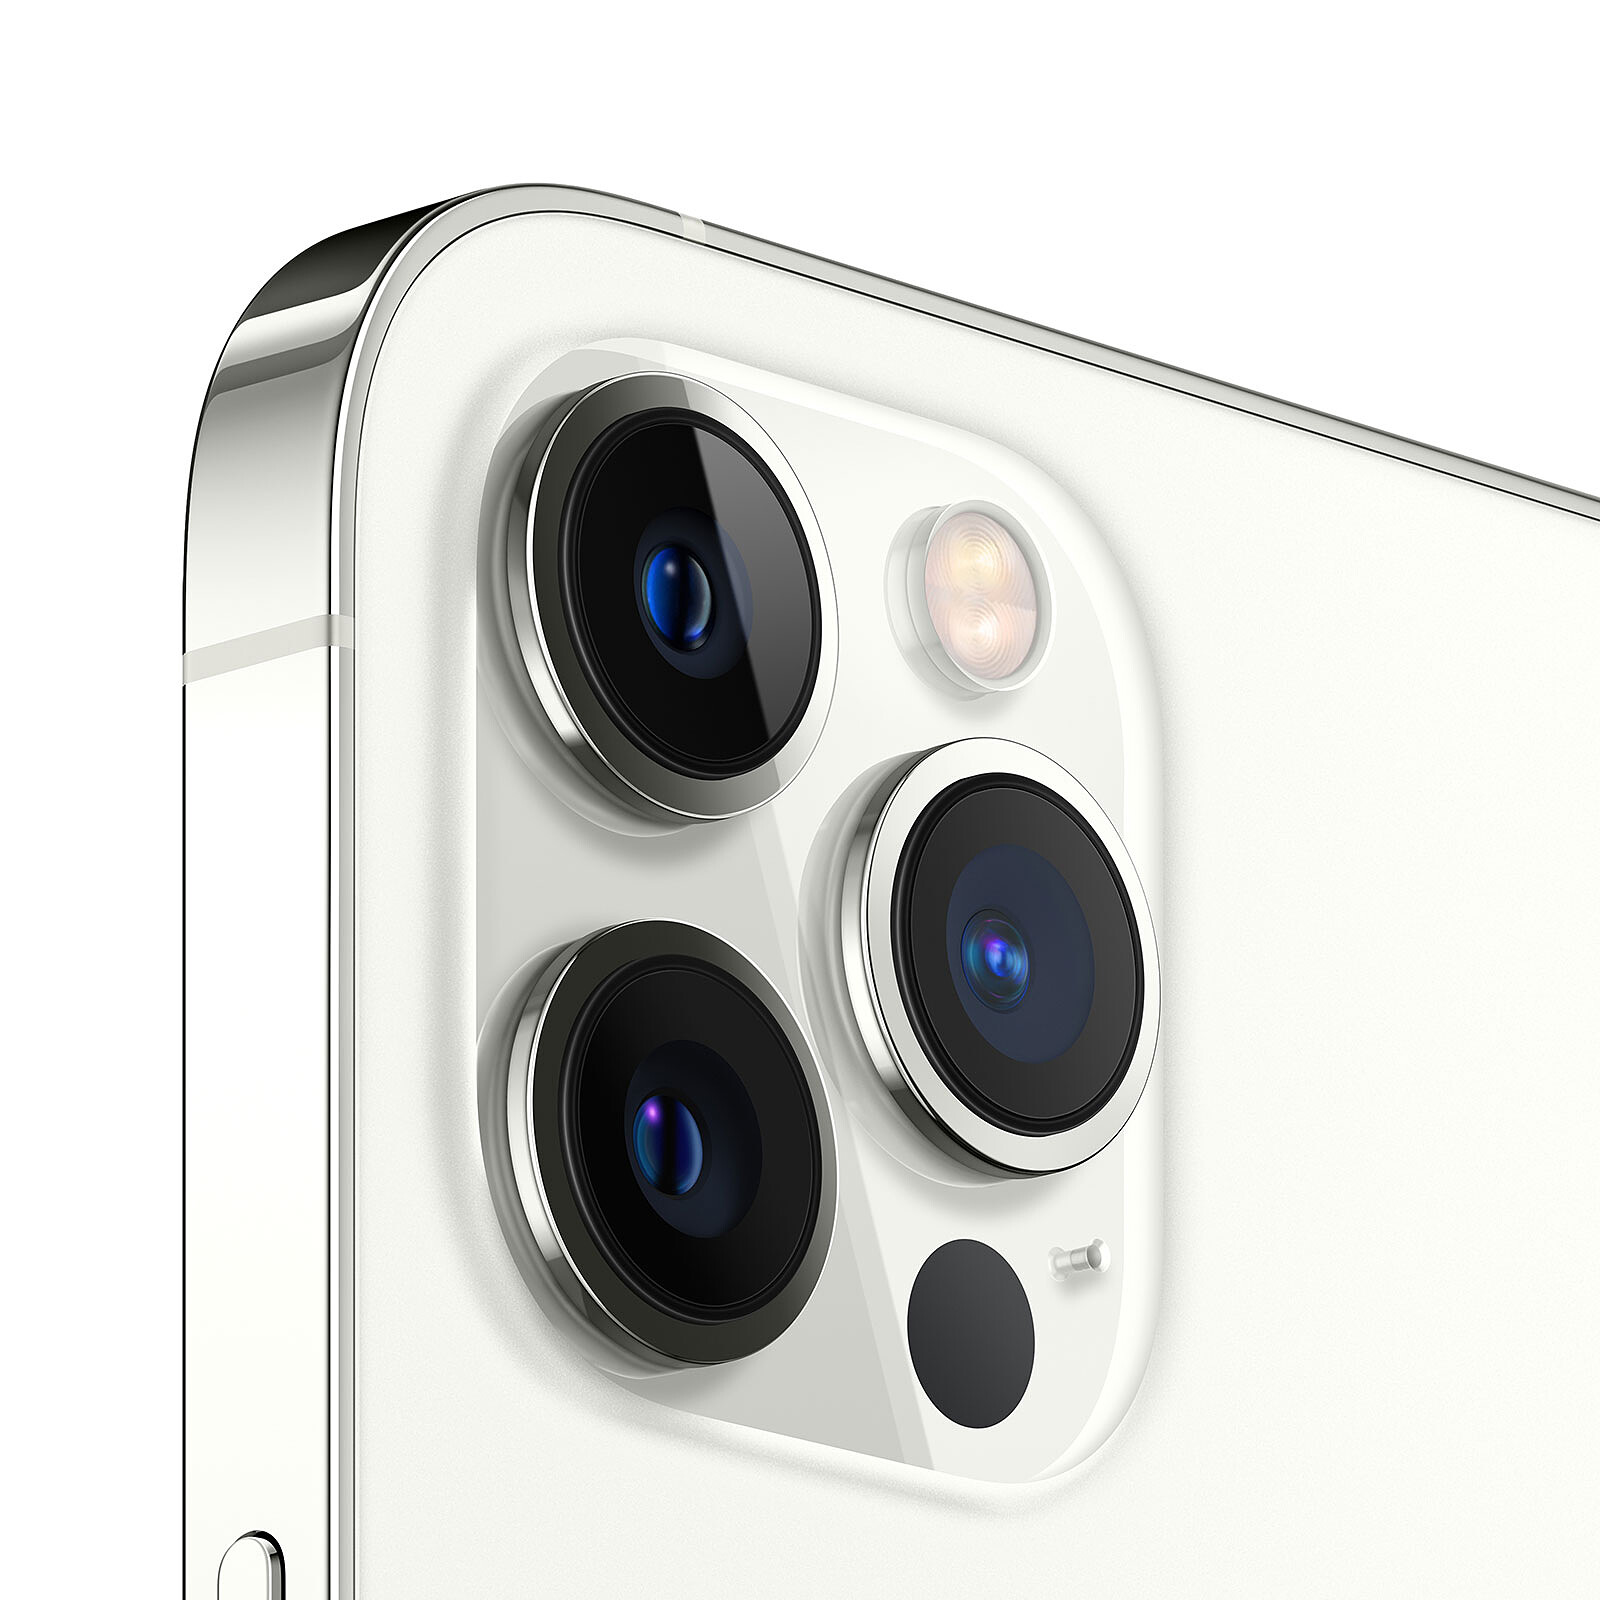 Apple iPhone 12 Pro Max 256GB Plata - Móvil y smartphone - LDLC